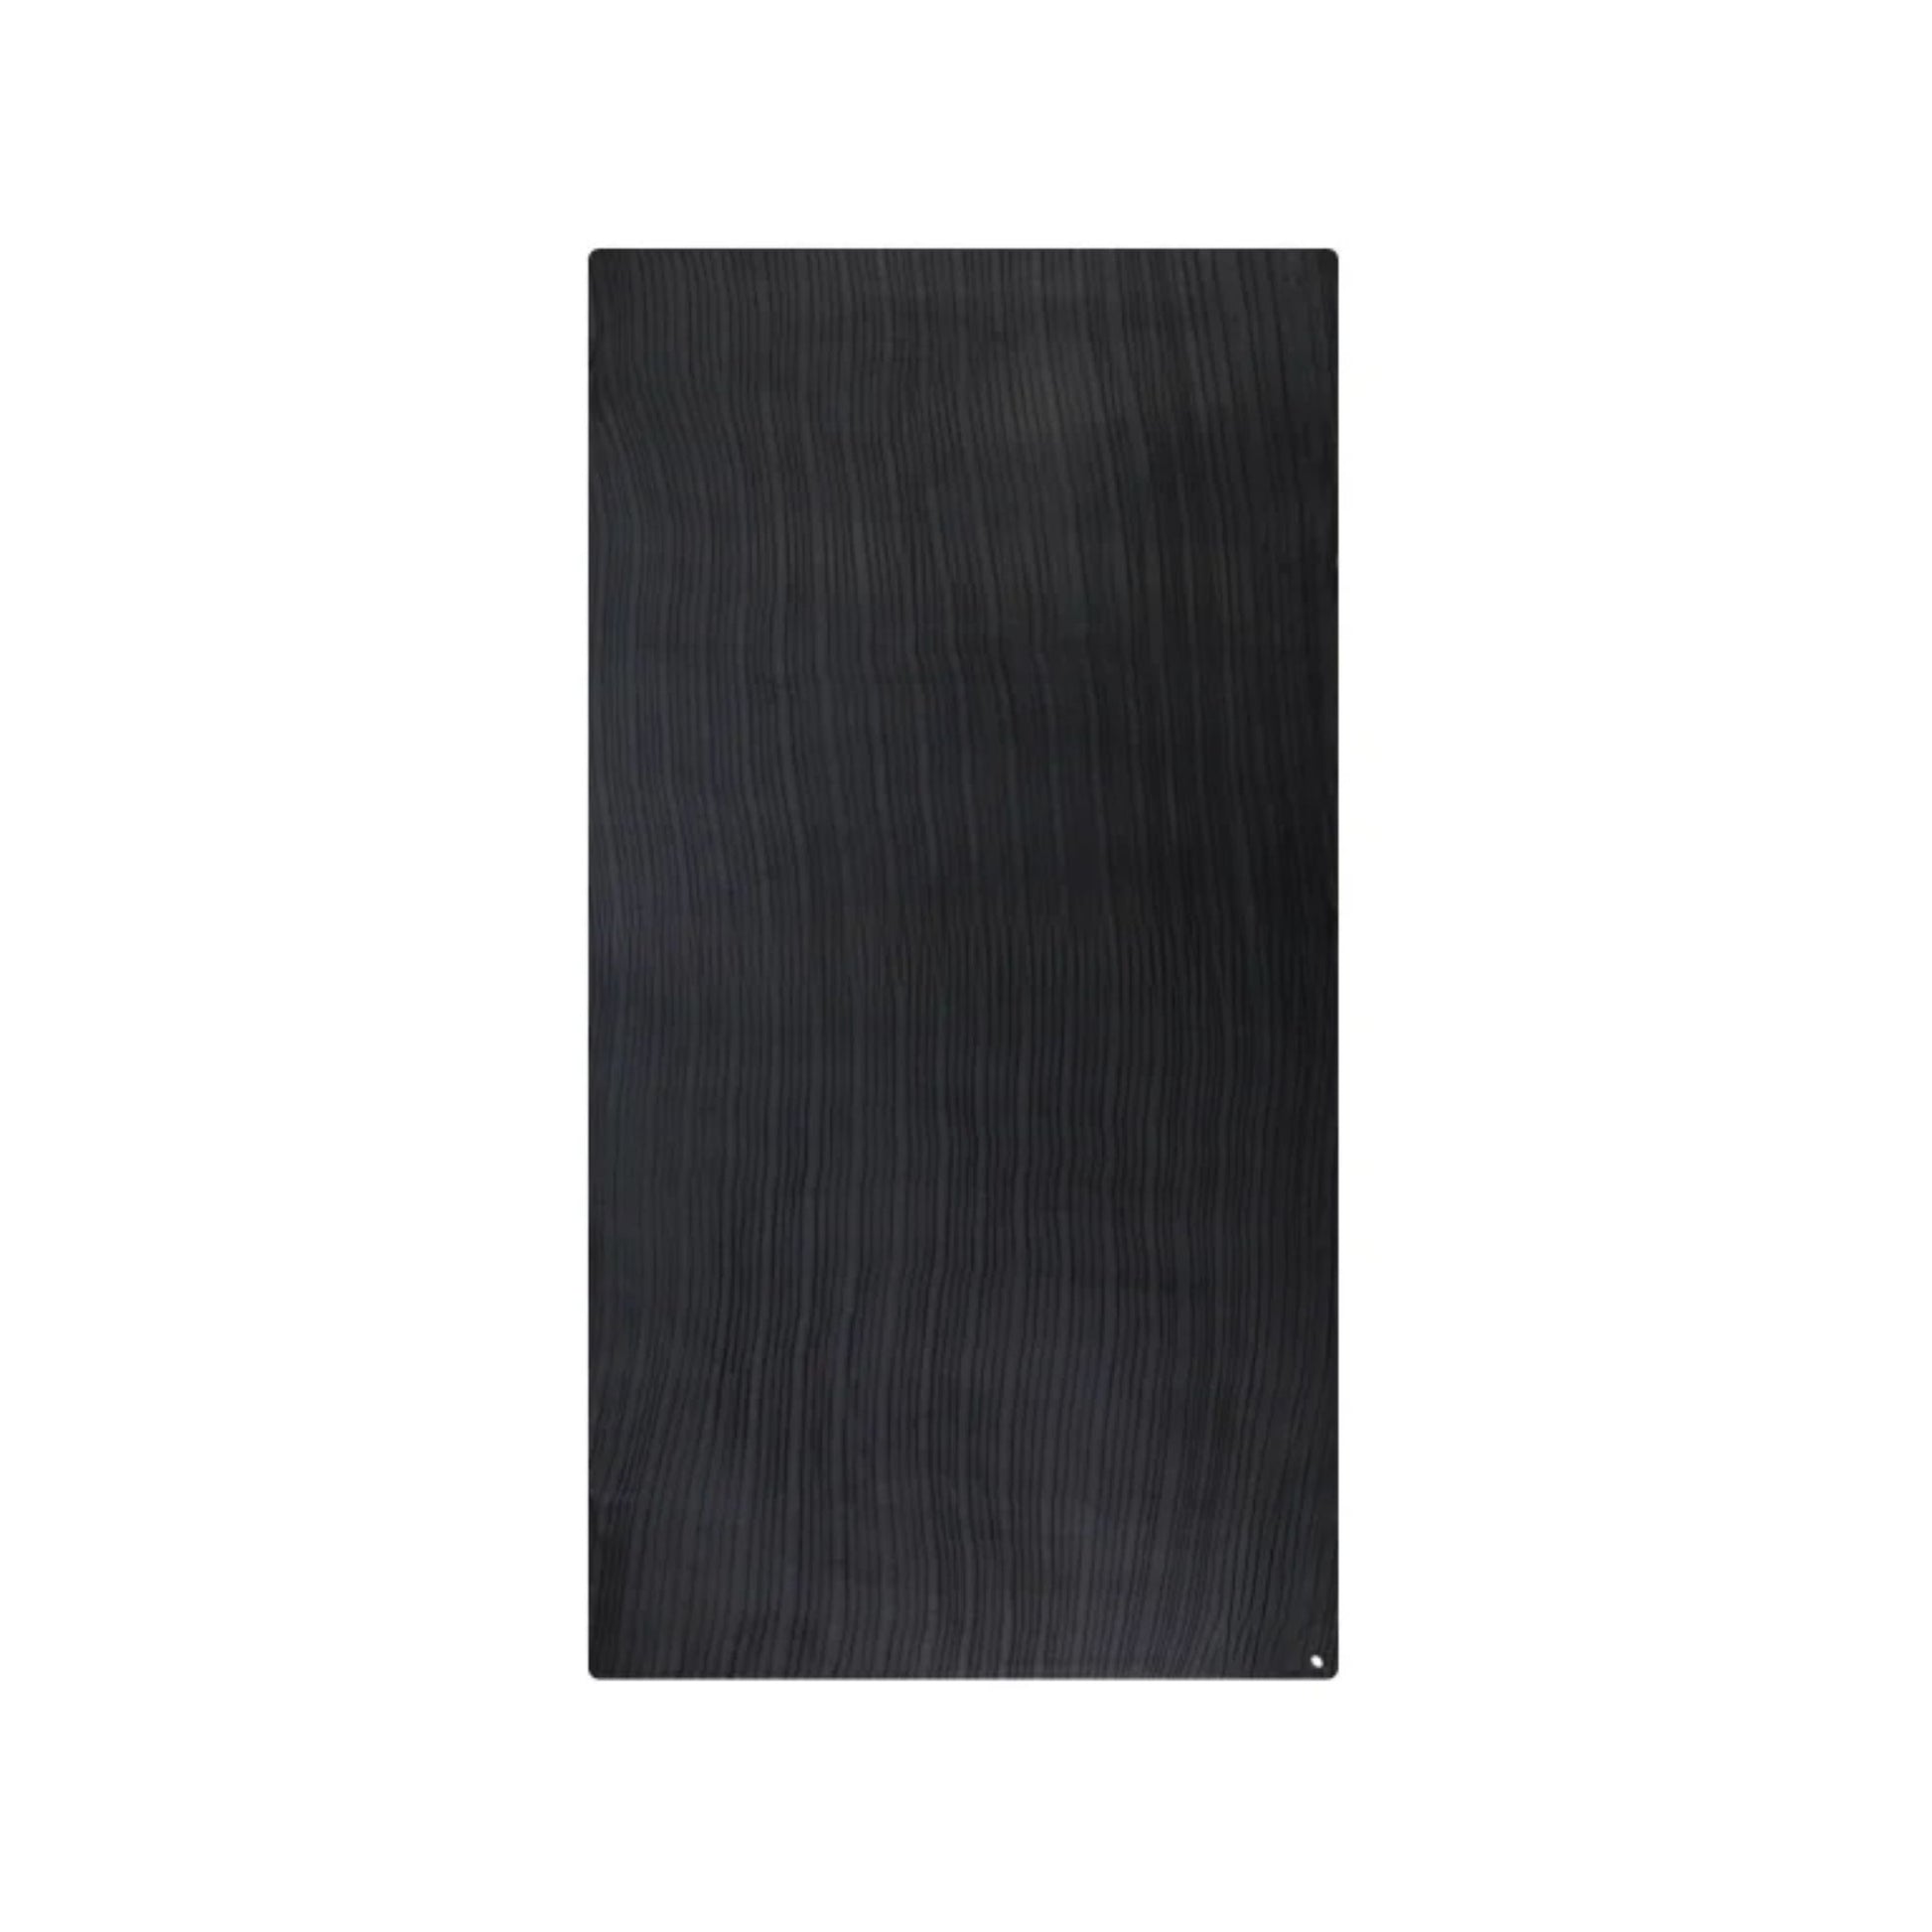 Stola plissettata semitrasparente colore Nero